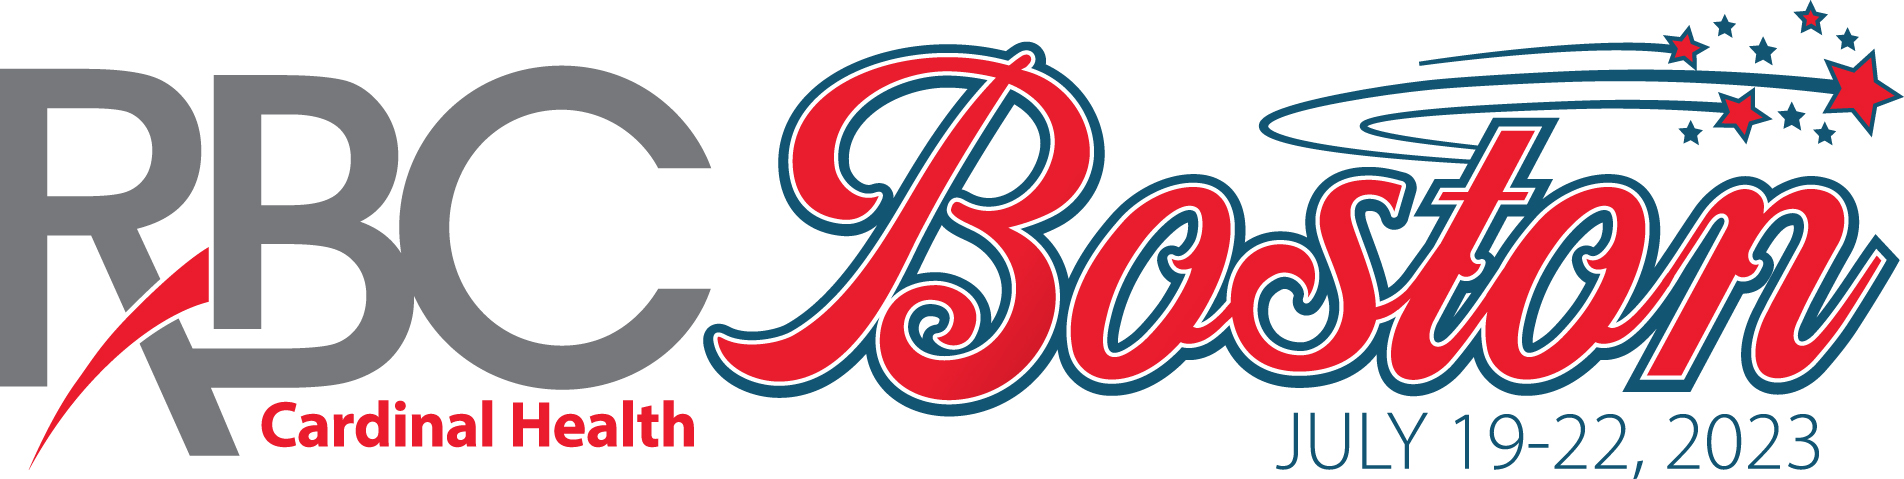 RBC logo_2023_Boston_FNL.jpg